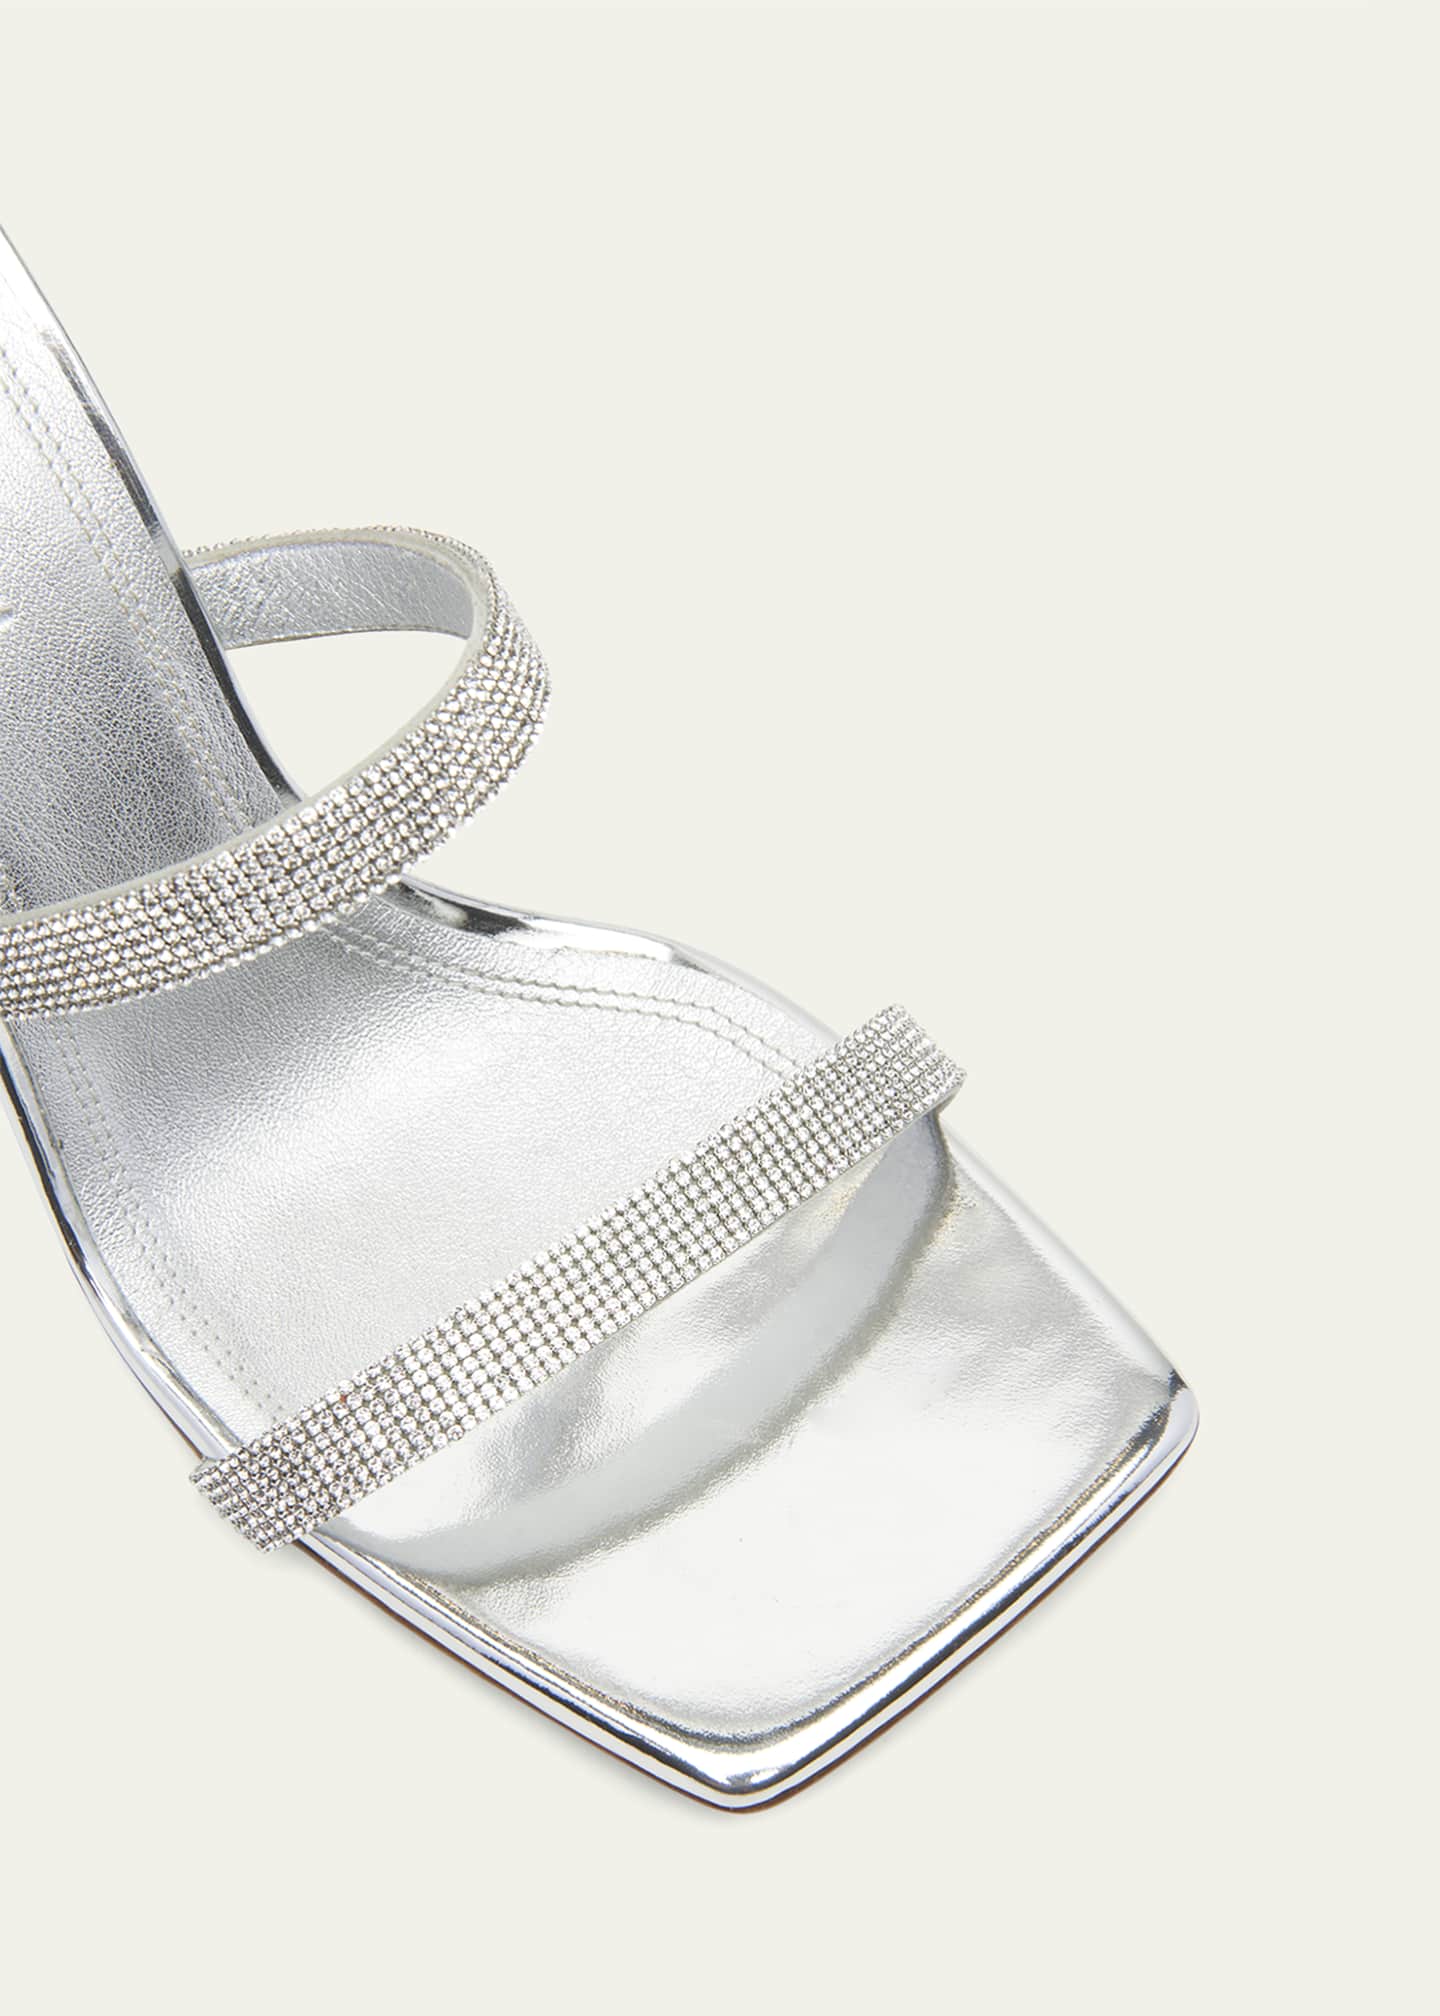 Amina Muaddi Rih Metallic Leather Stiletto Sandals - Bergdorf Goodman